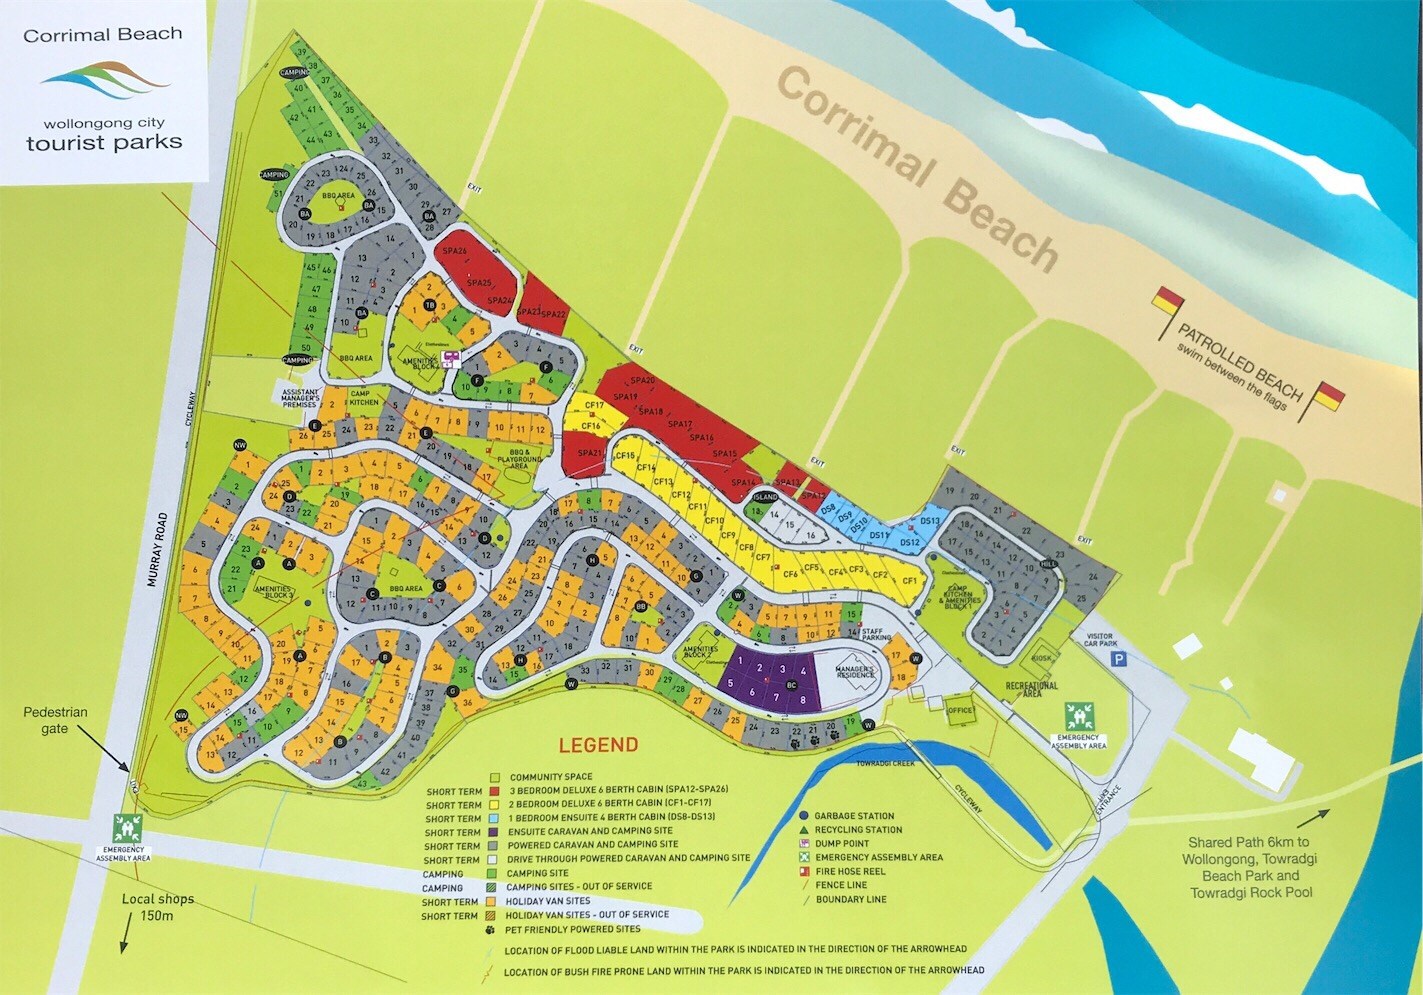 corrimal beach tourist park map